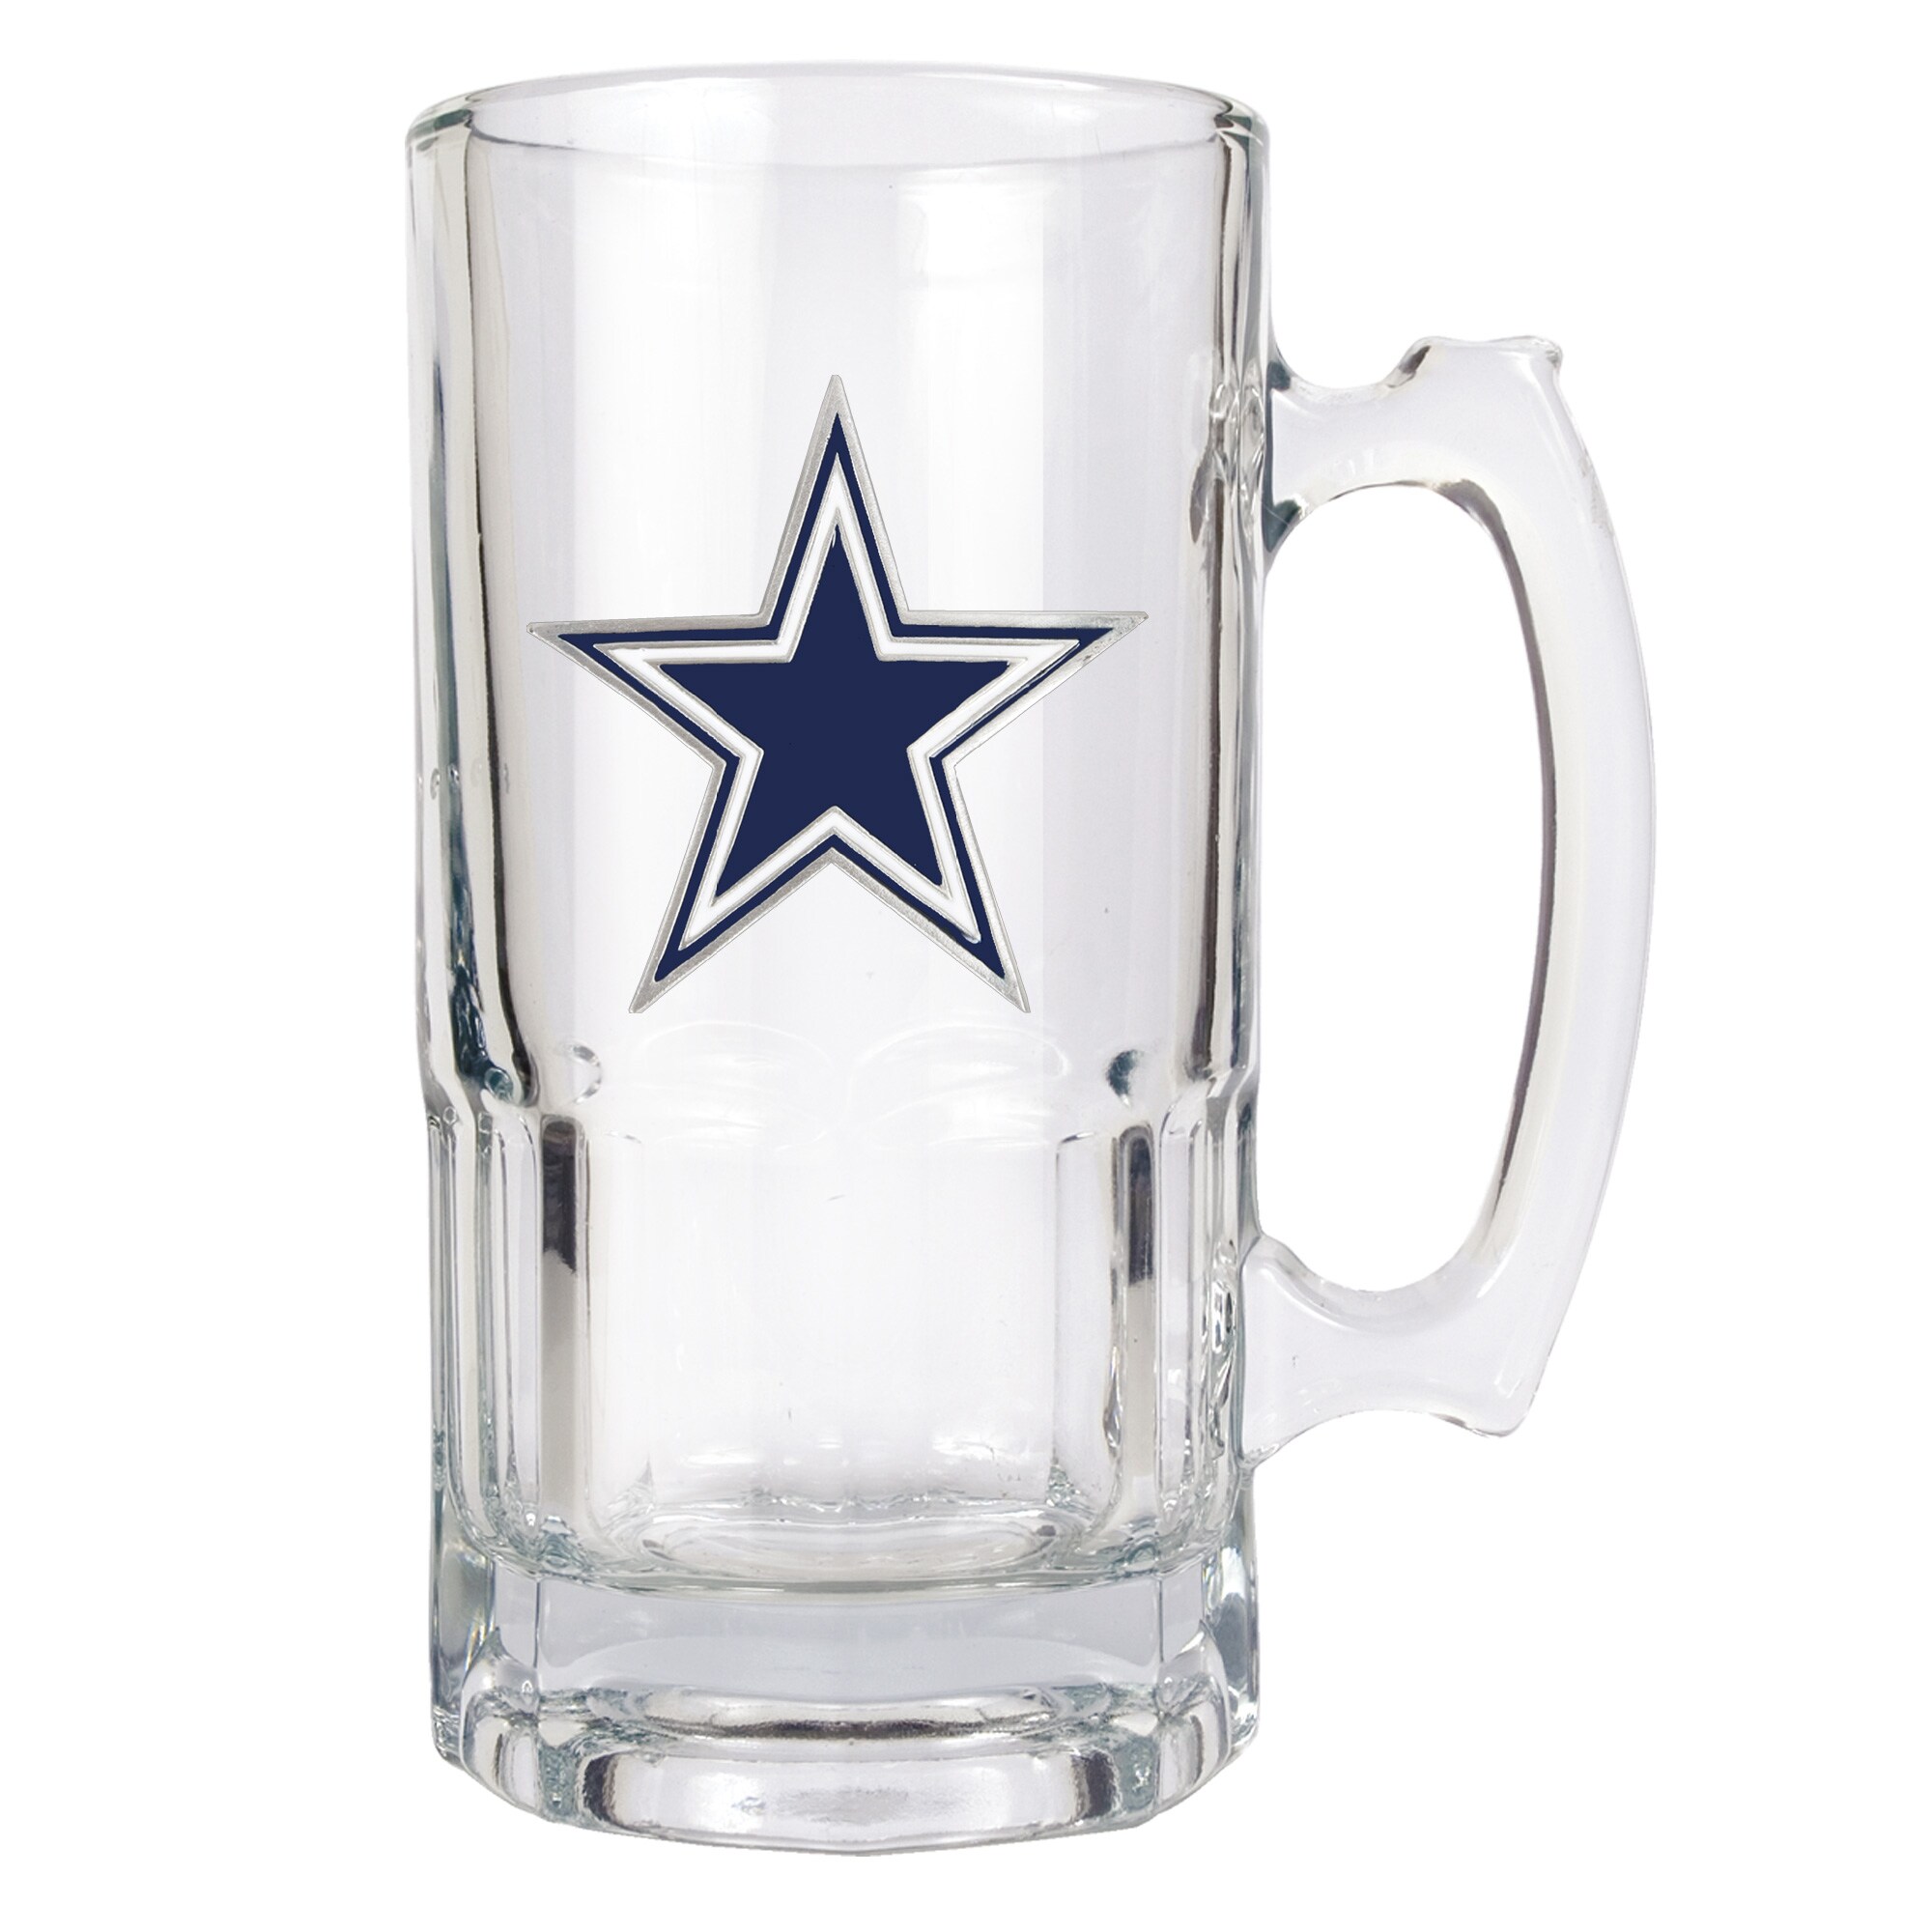 Dallas Cowboys 15oz. Team Colored Jump Mug